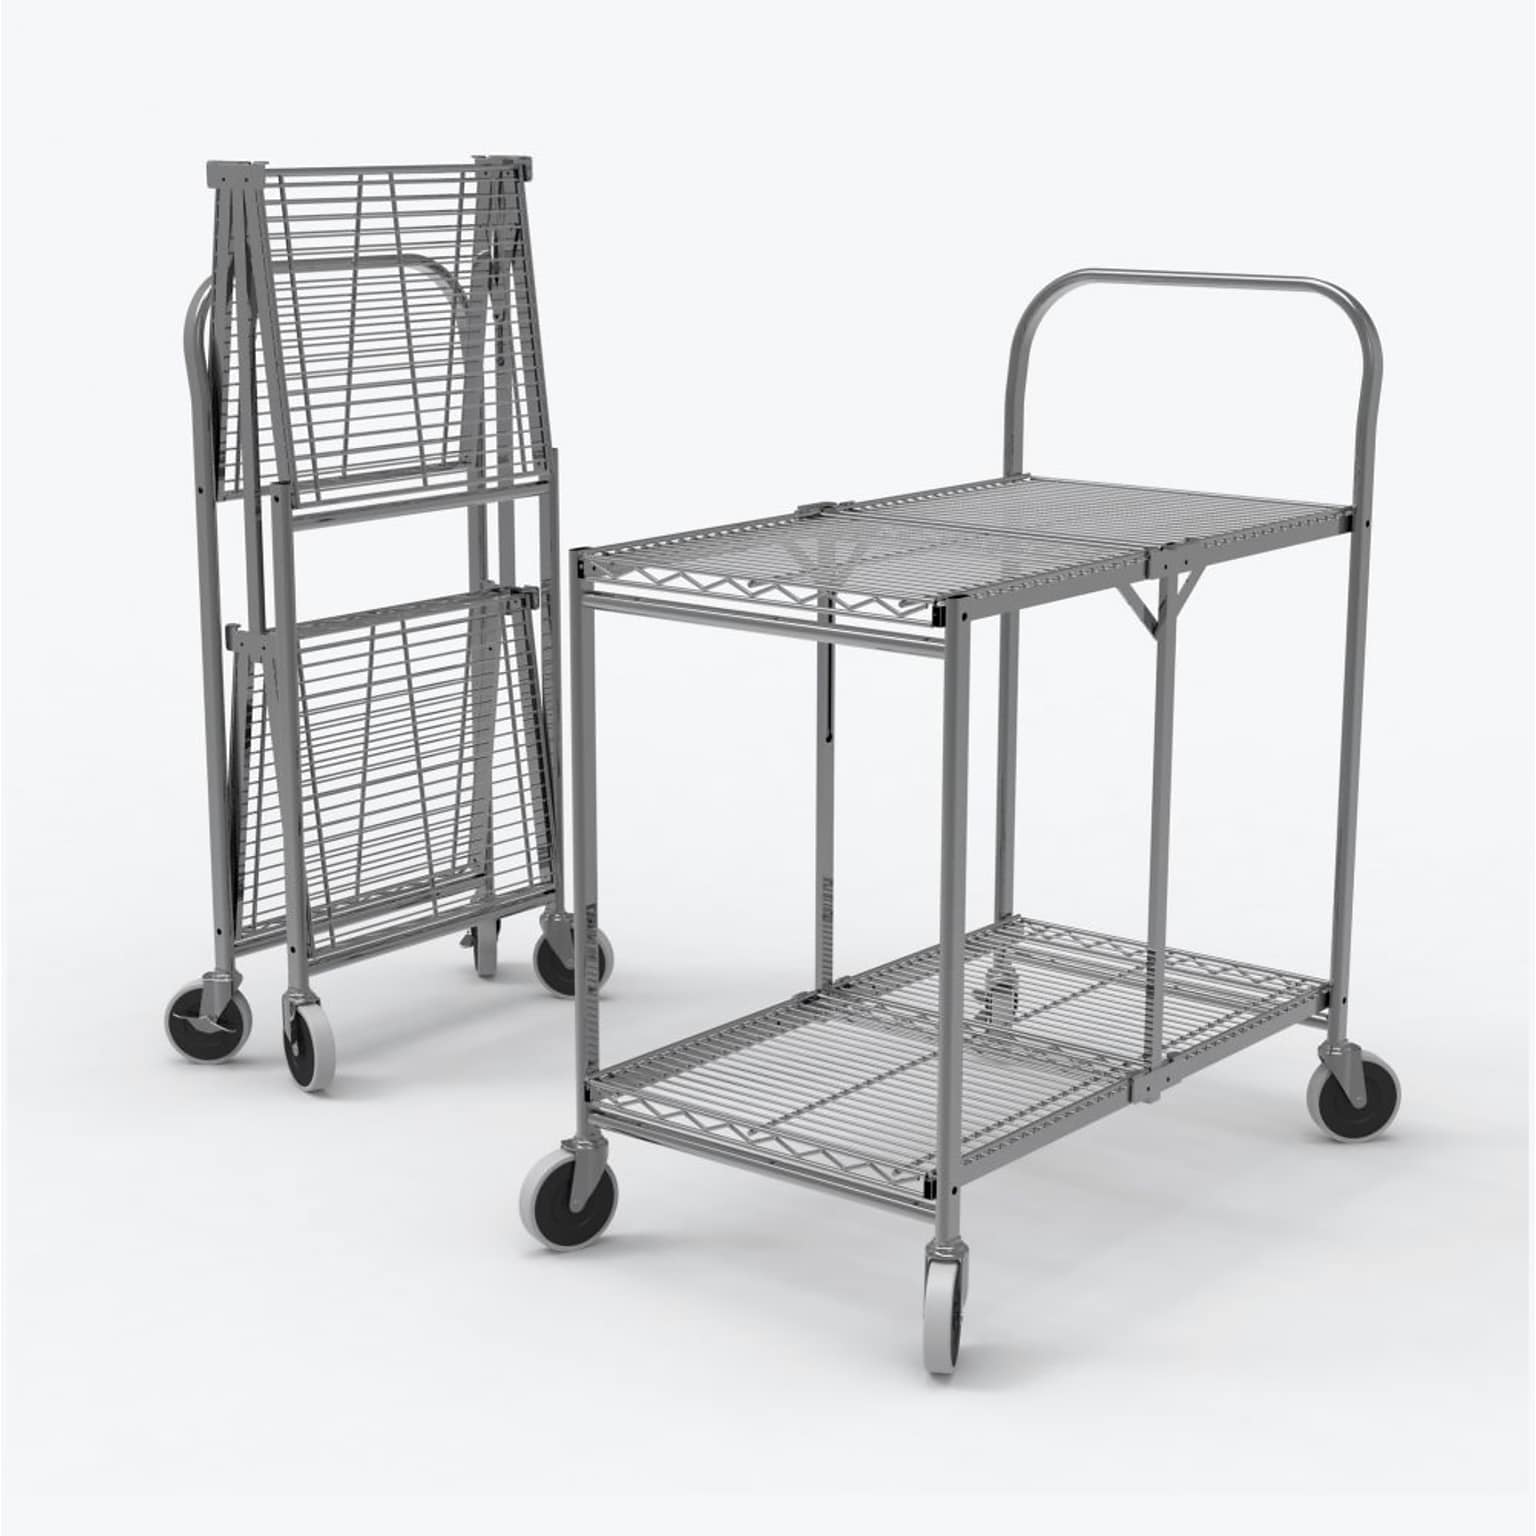 Luxor 2-Shelf Metal Mobile Utility Cart with Swivel Wheels, Chrome (WSCC-2)